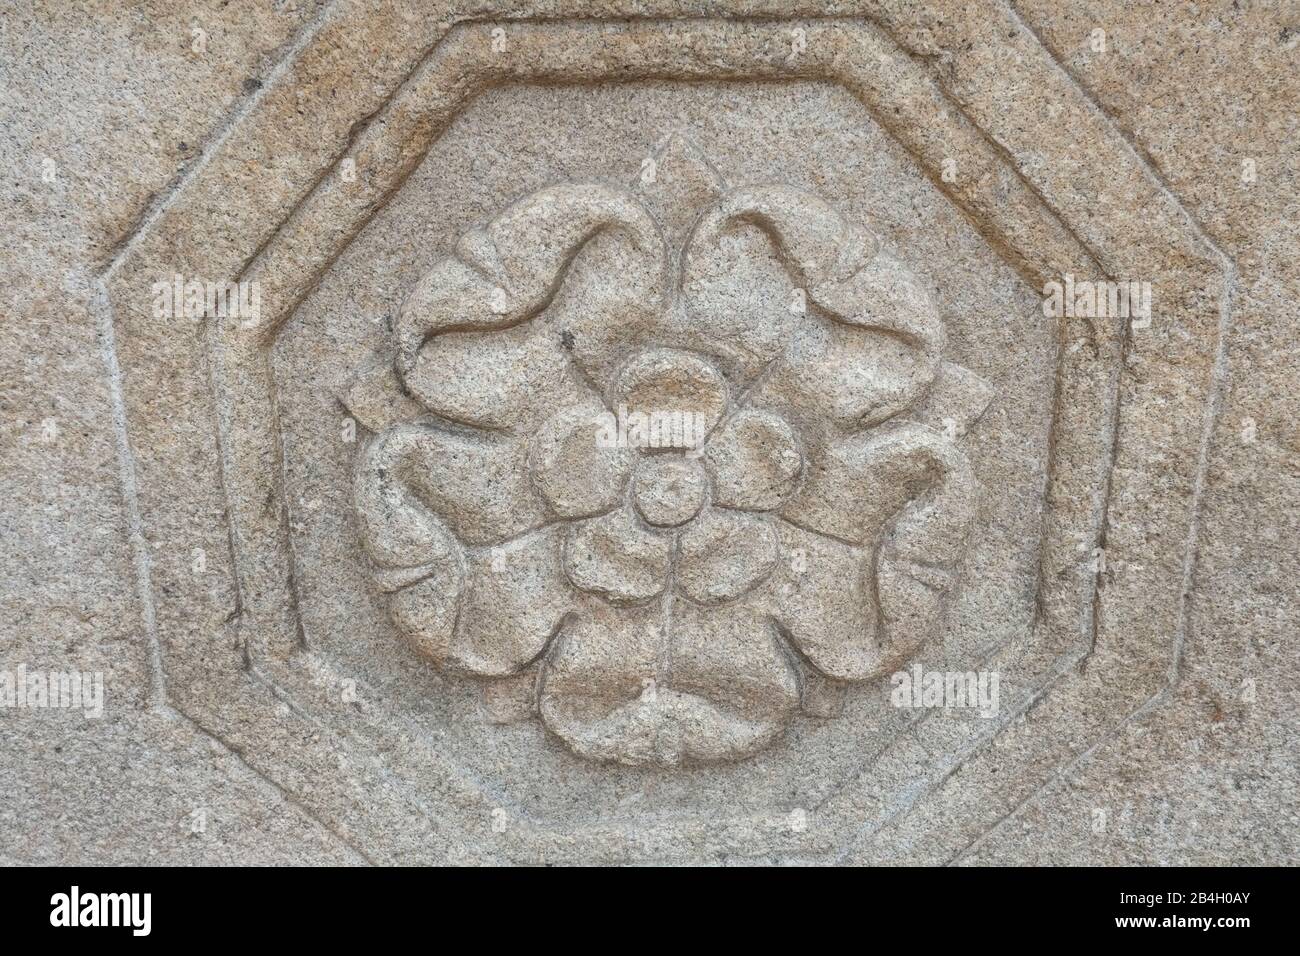 Image of rose carved into granite slab Stock Photo